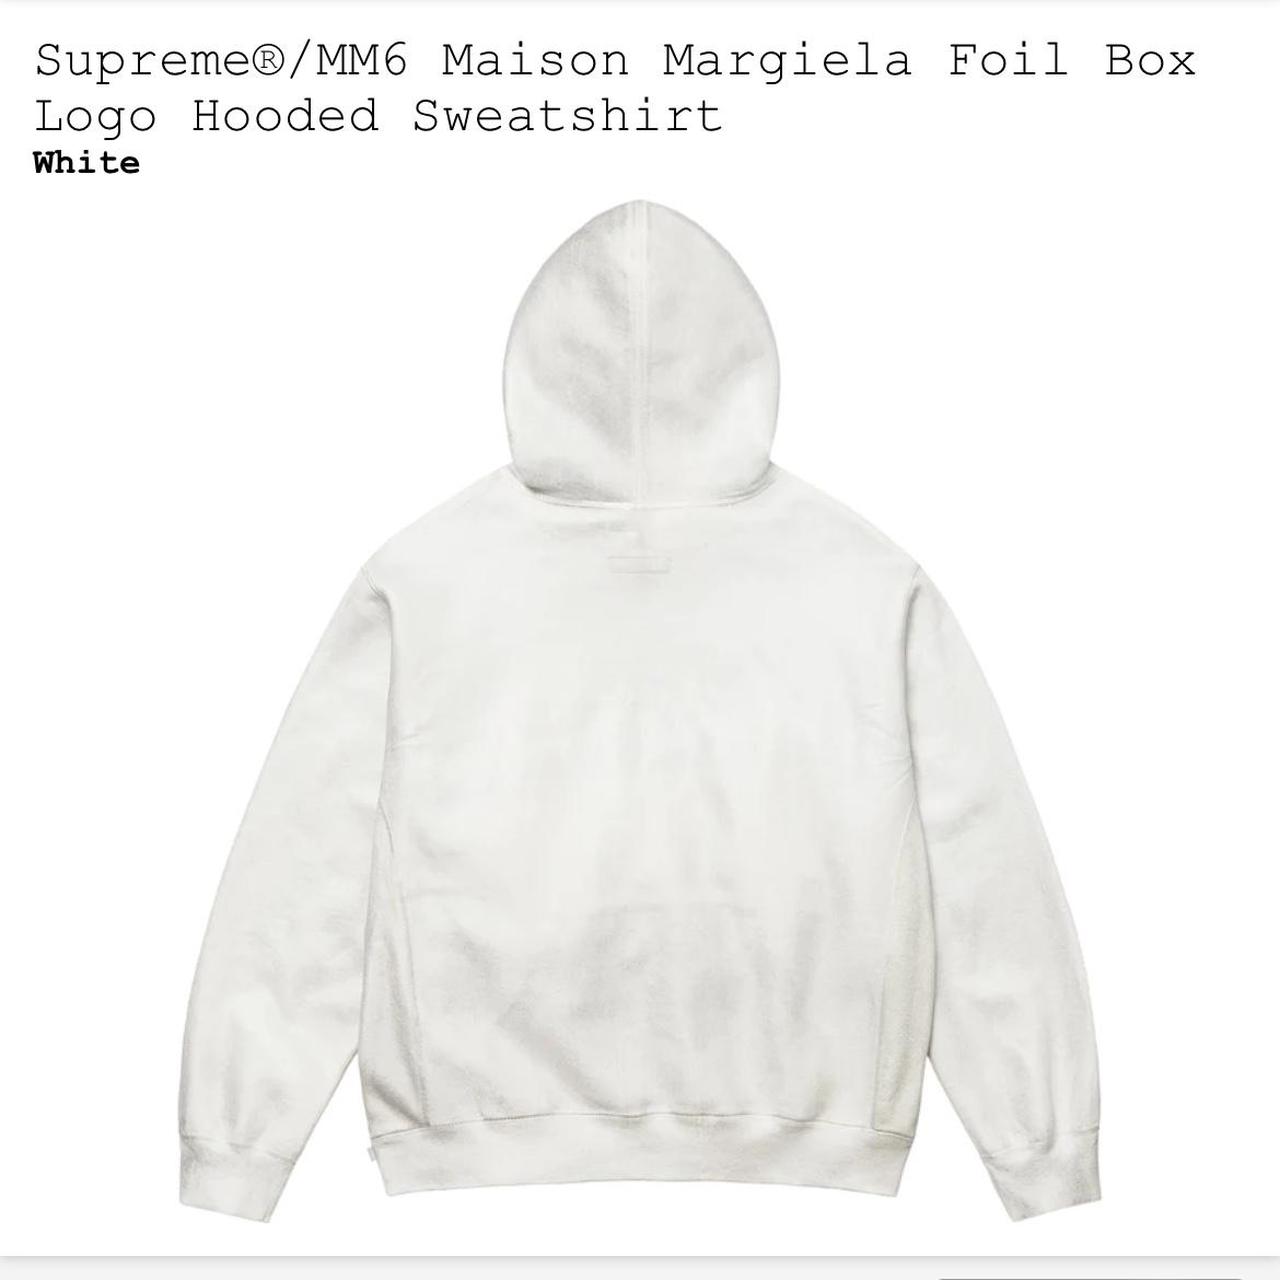 Supreme x MM6 Maison Margiela foil box logo hooded - Depop